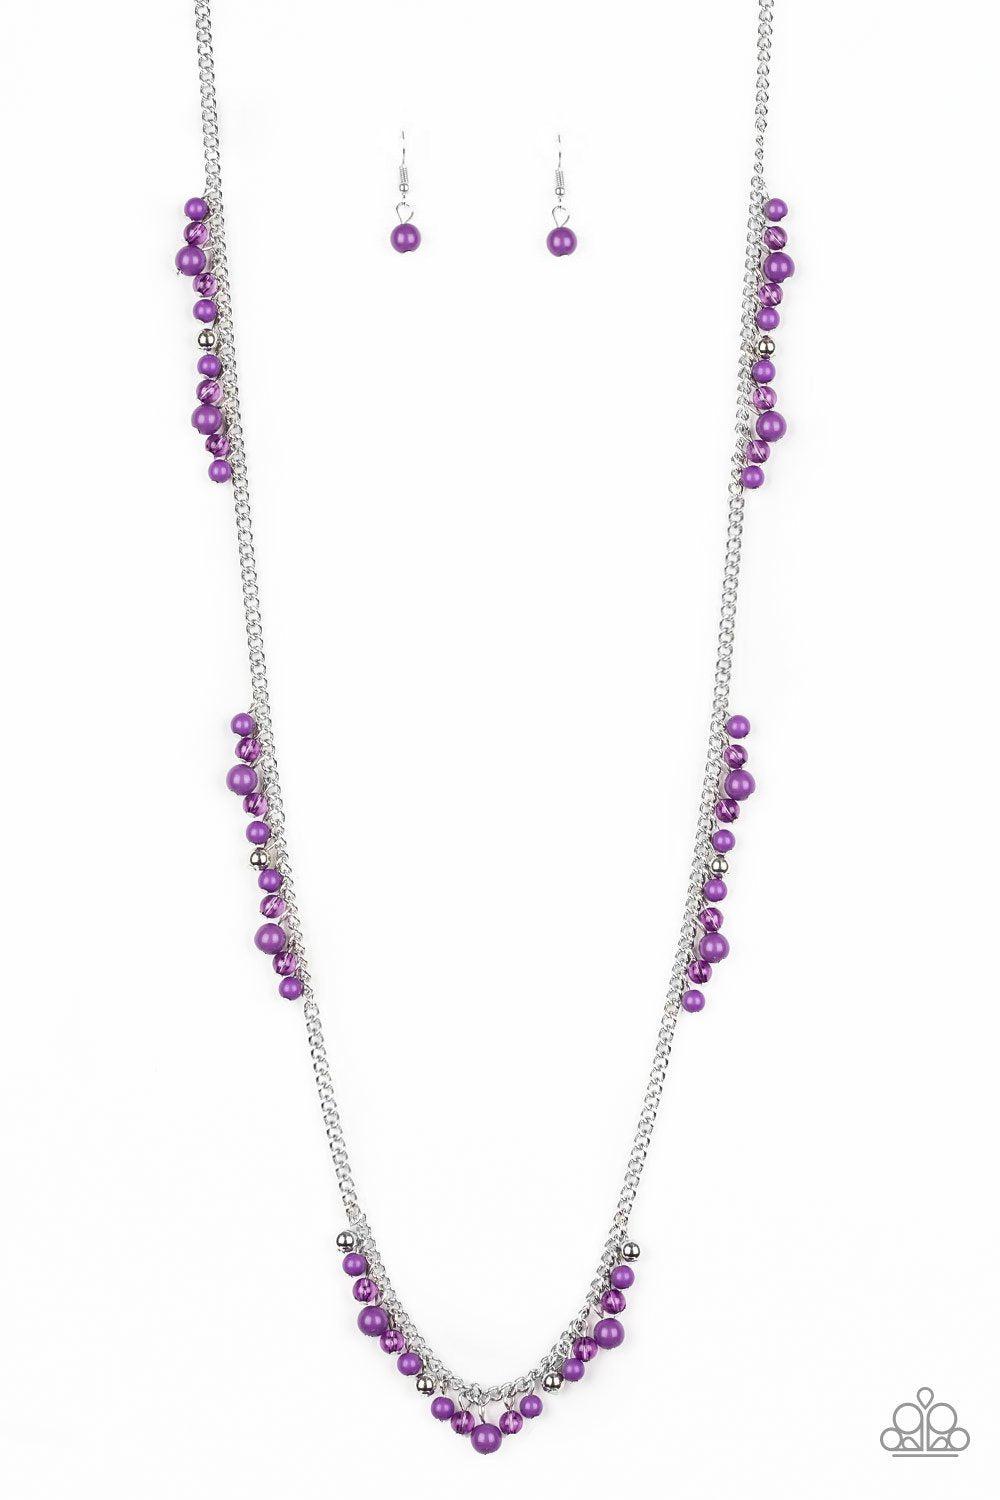 Miami Mojito Purple and Silver Necklace - Paparazzi Accessories - lightbox -CarasShop.com - $5 Jewelry by Cara Jewels